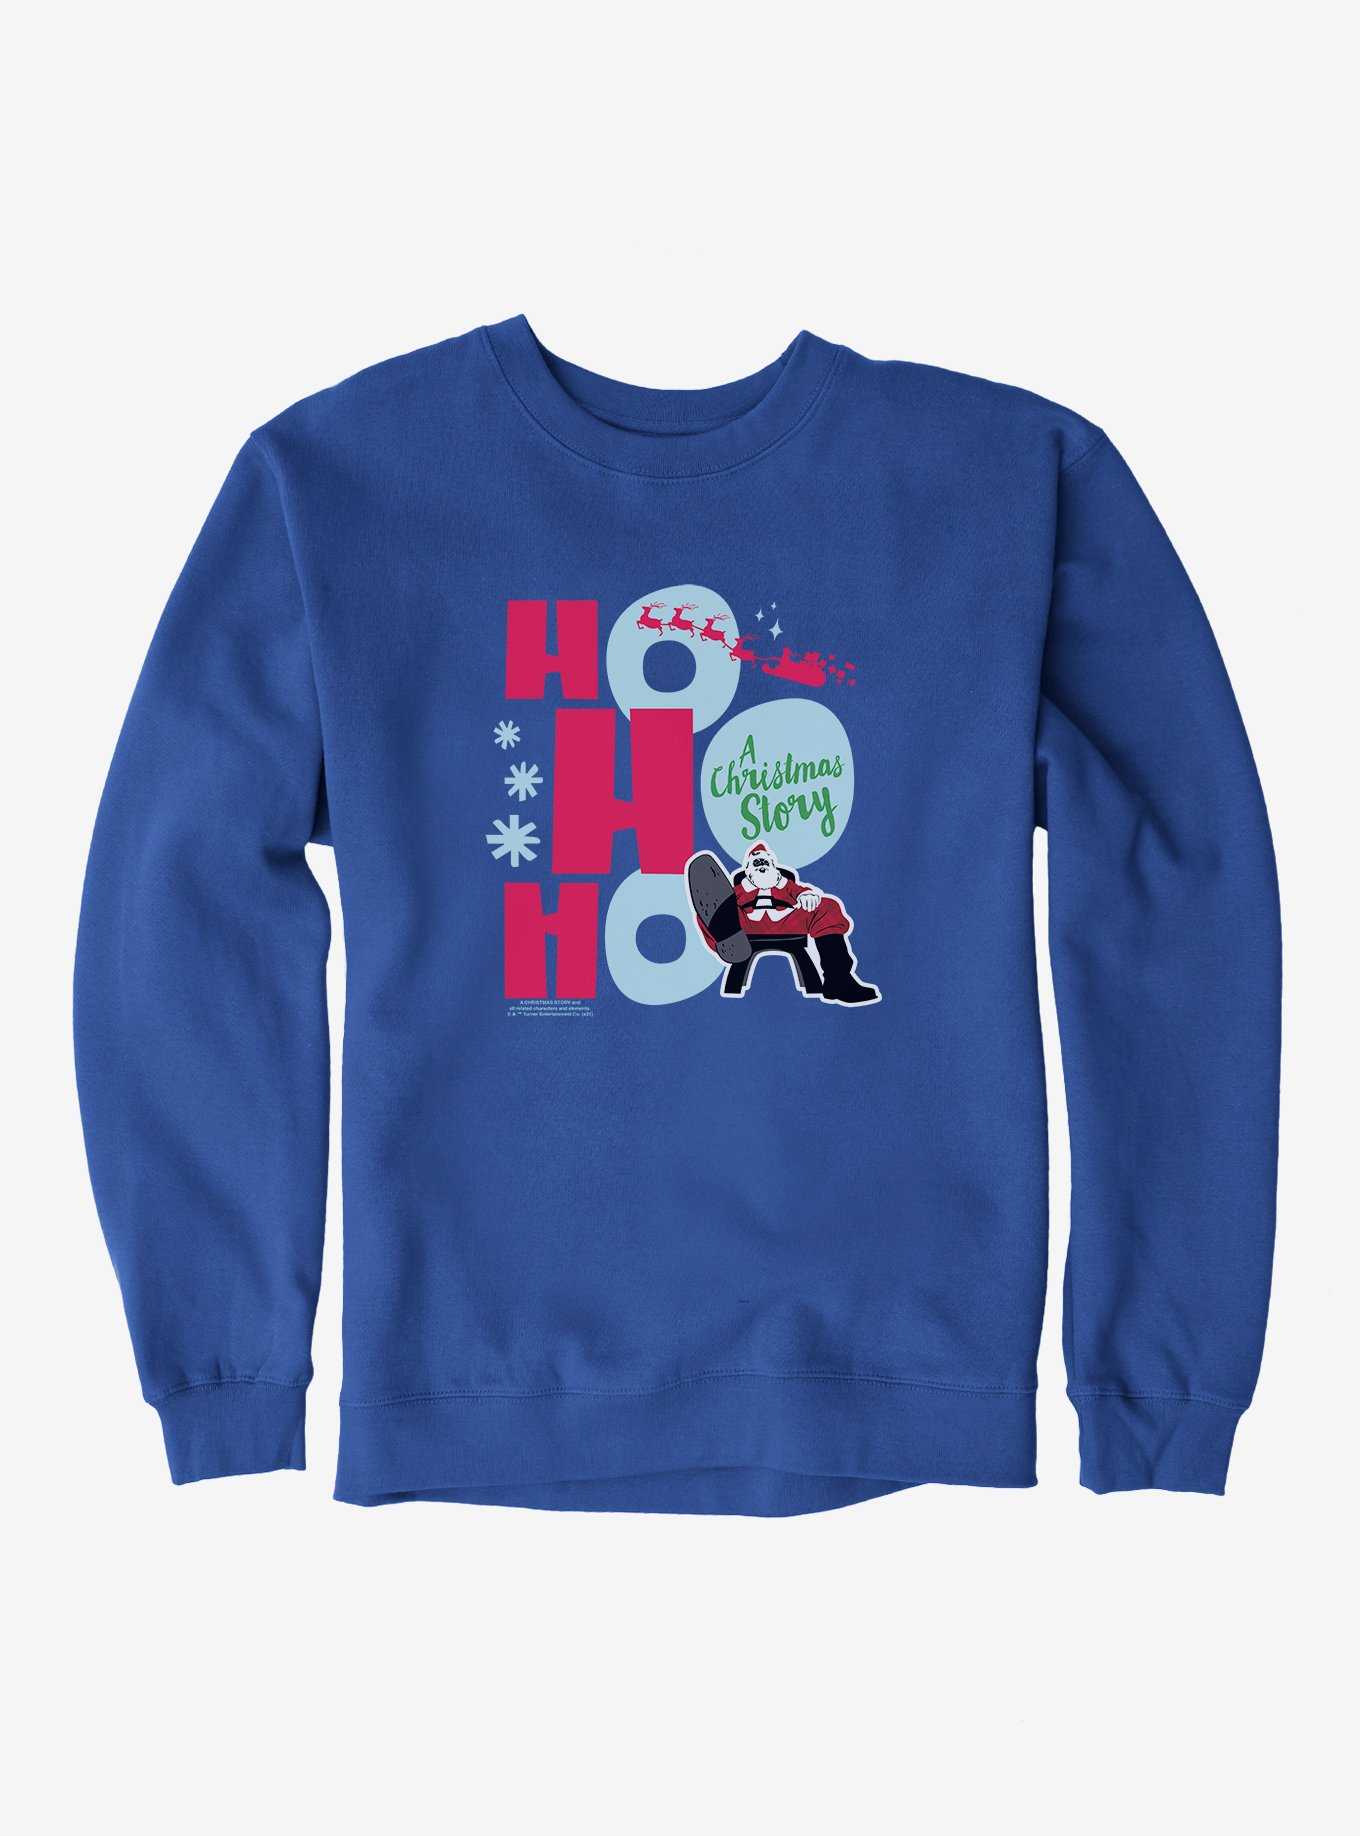 A Christmas Story  Slide Kick  Sweatshirt, ROYAL BLUE, hi-res